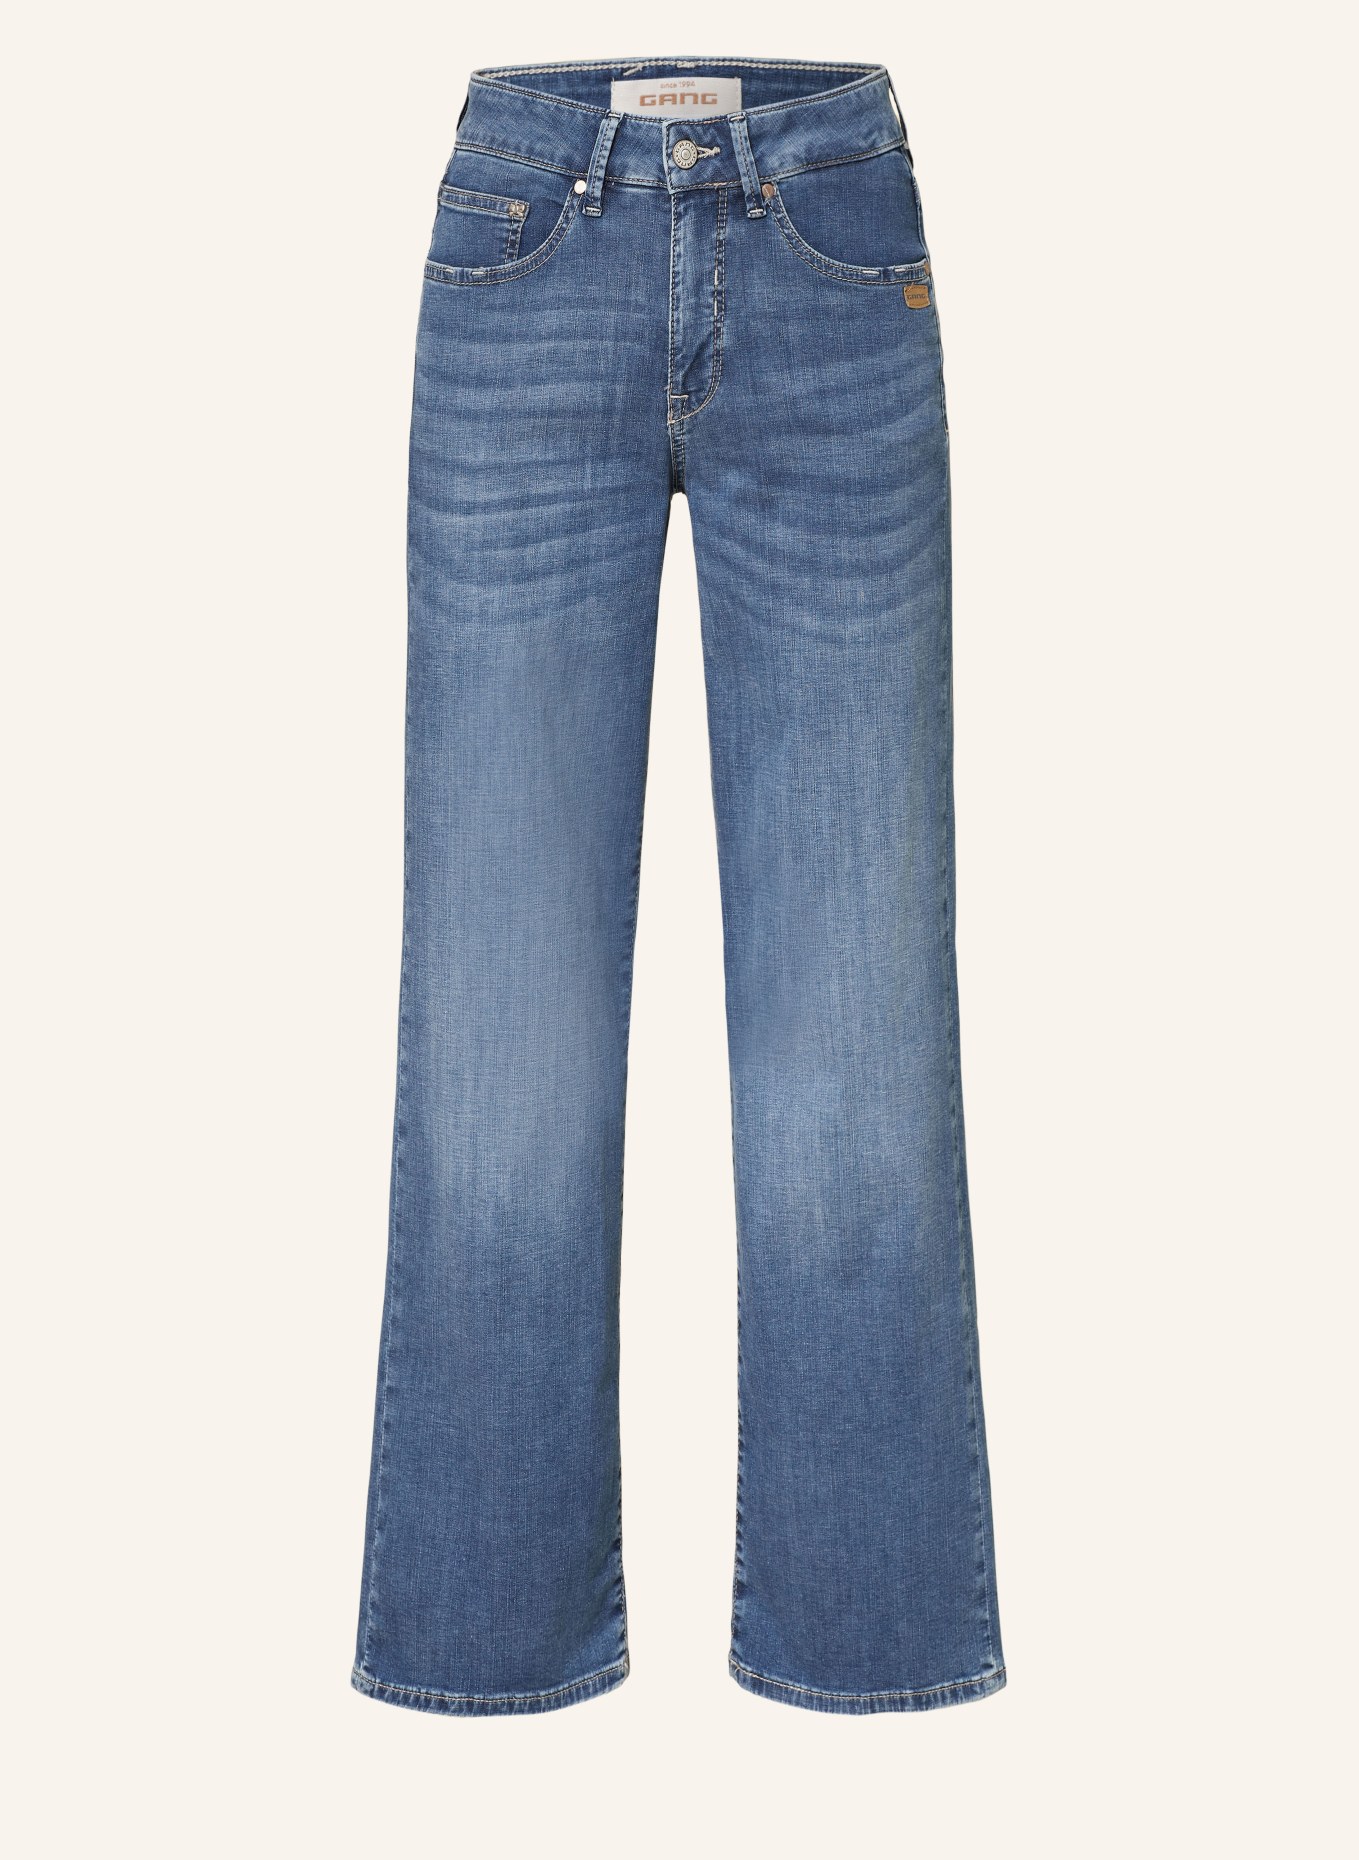 GANG Straight Jeans CARLOTTA, Farbe: 7596 midium summer wash (Bild 1)